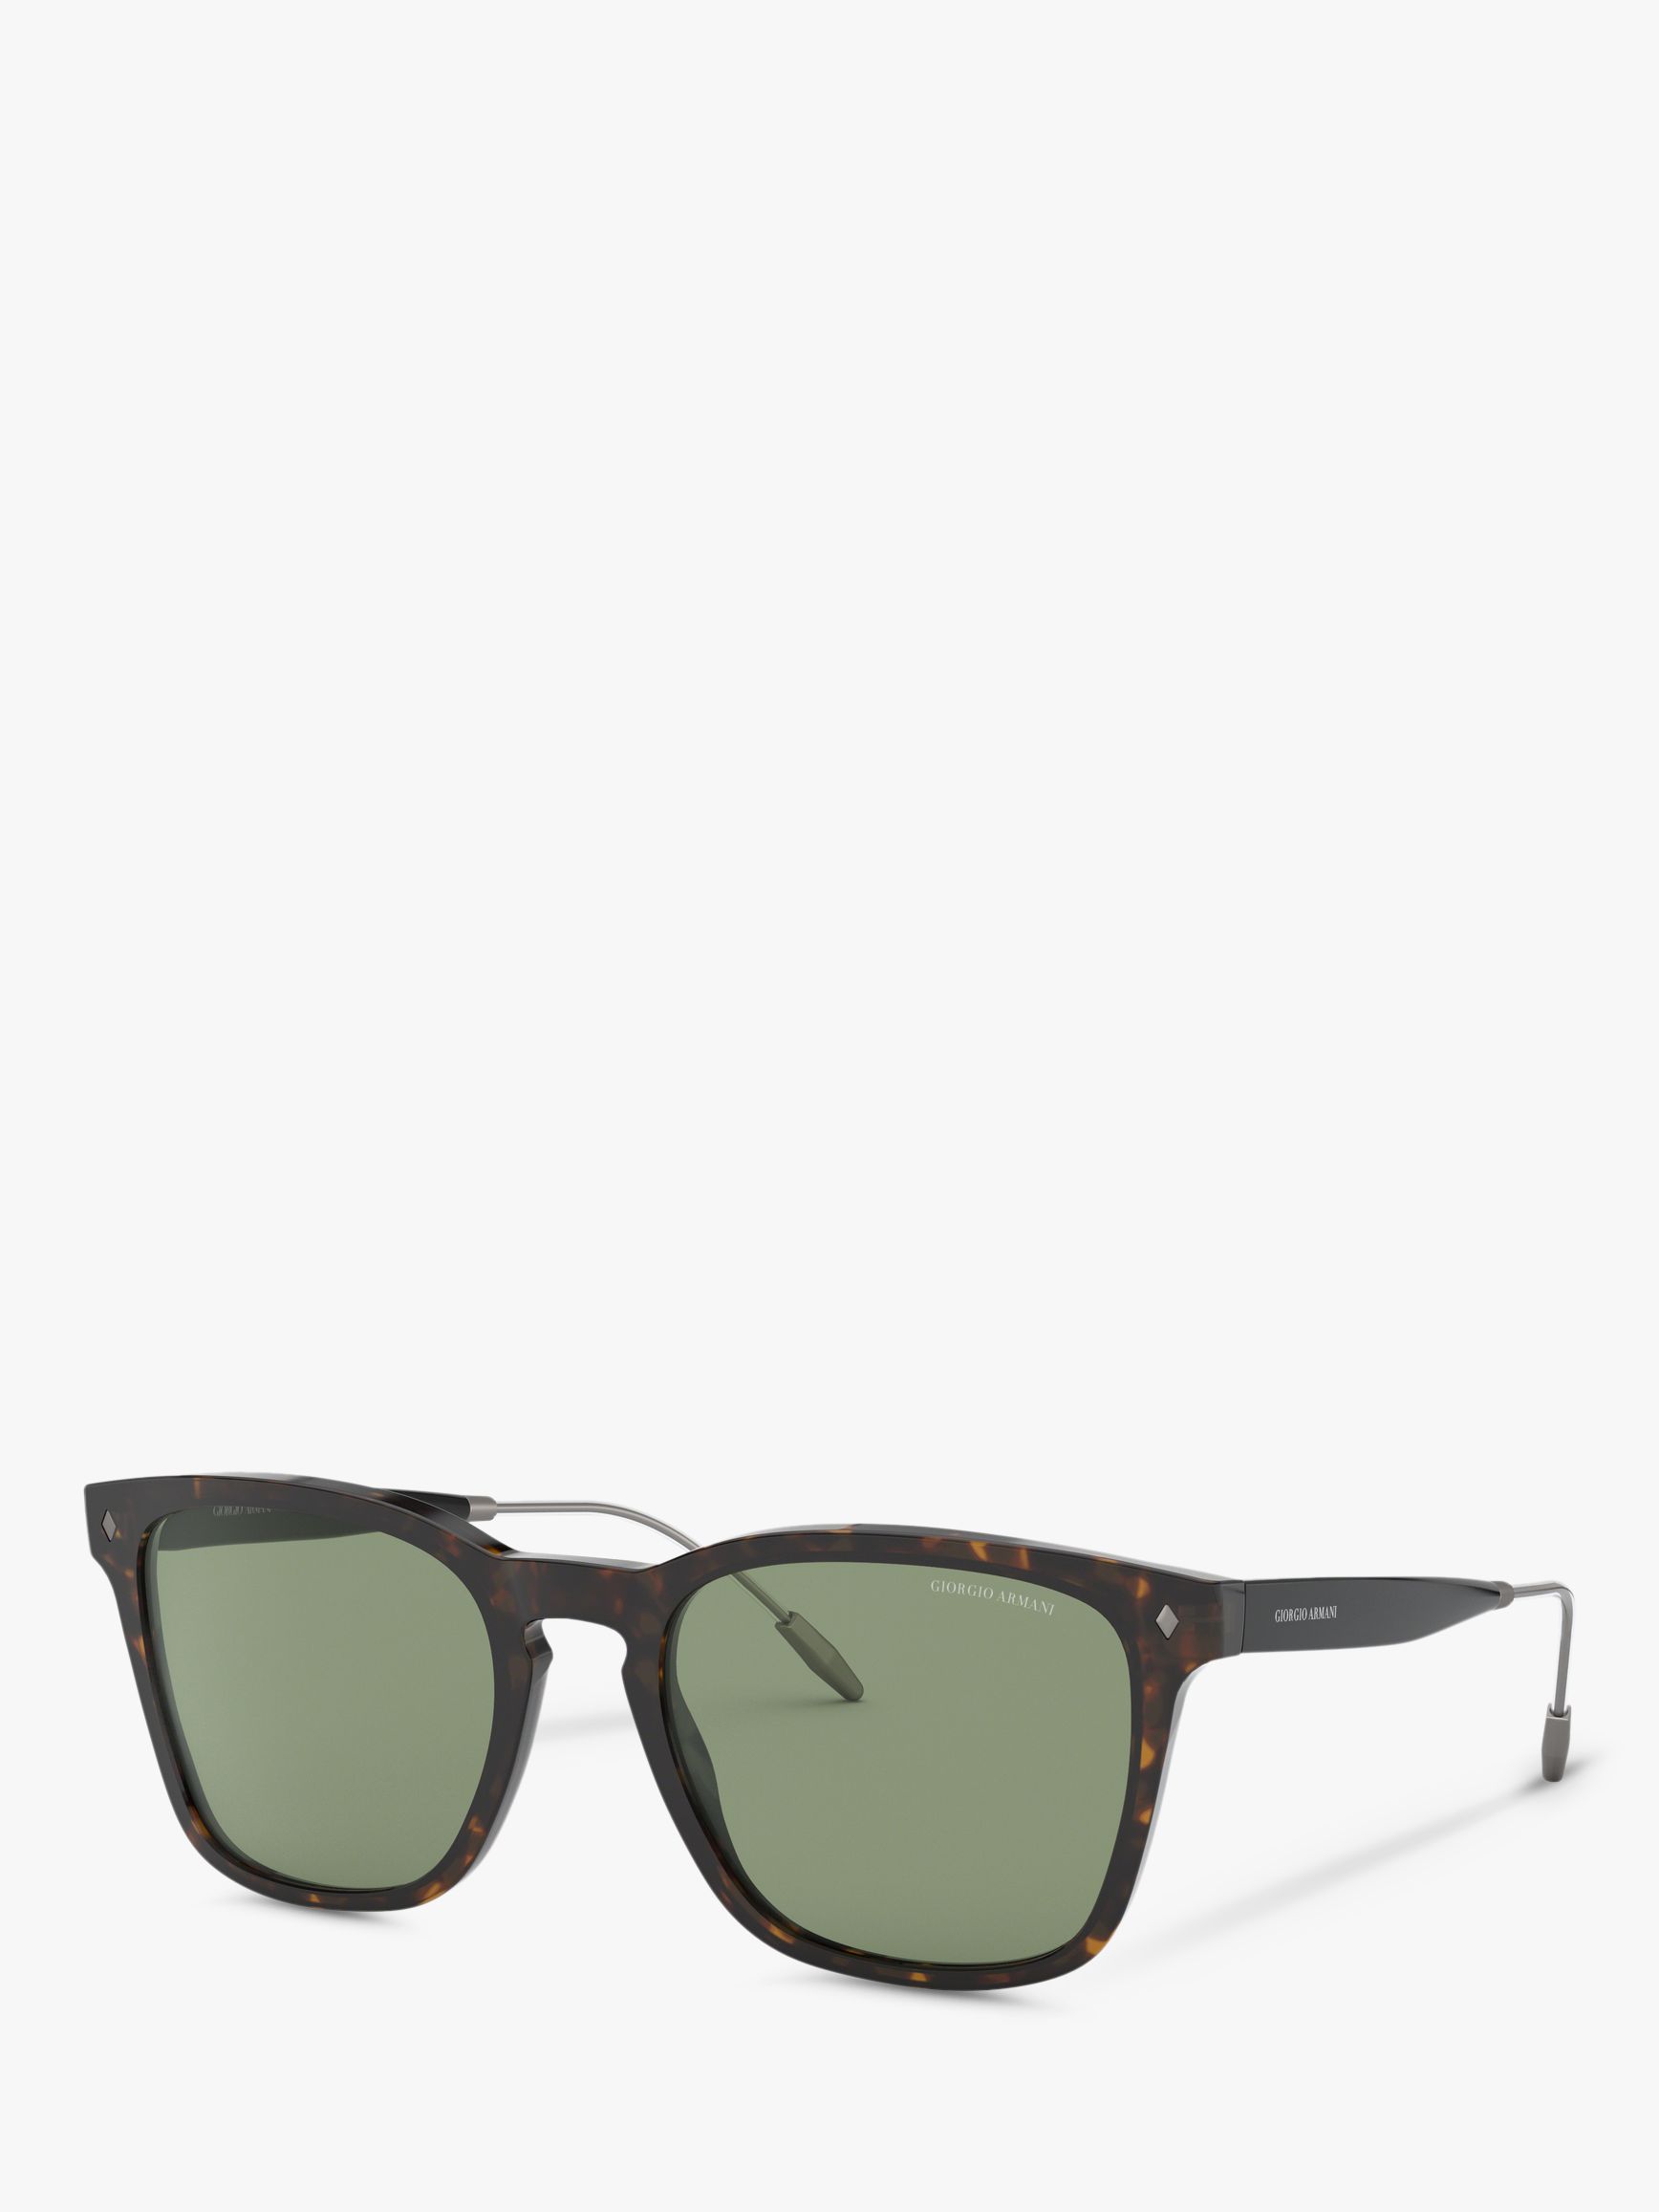 Square Sunglasses, Tortoise/Green 